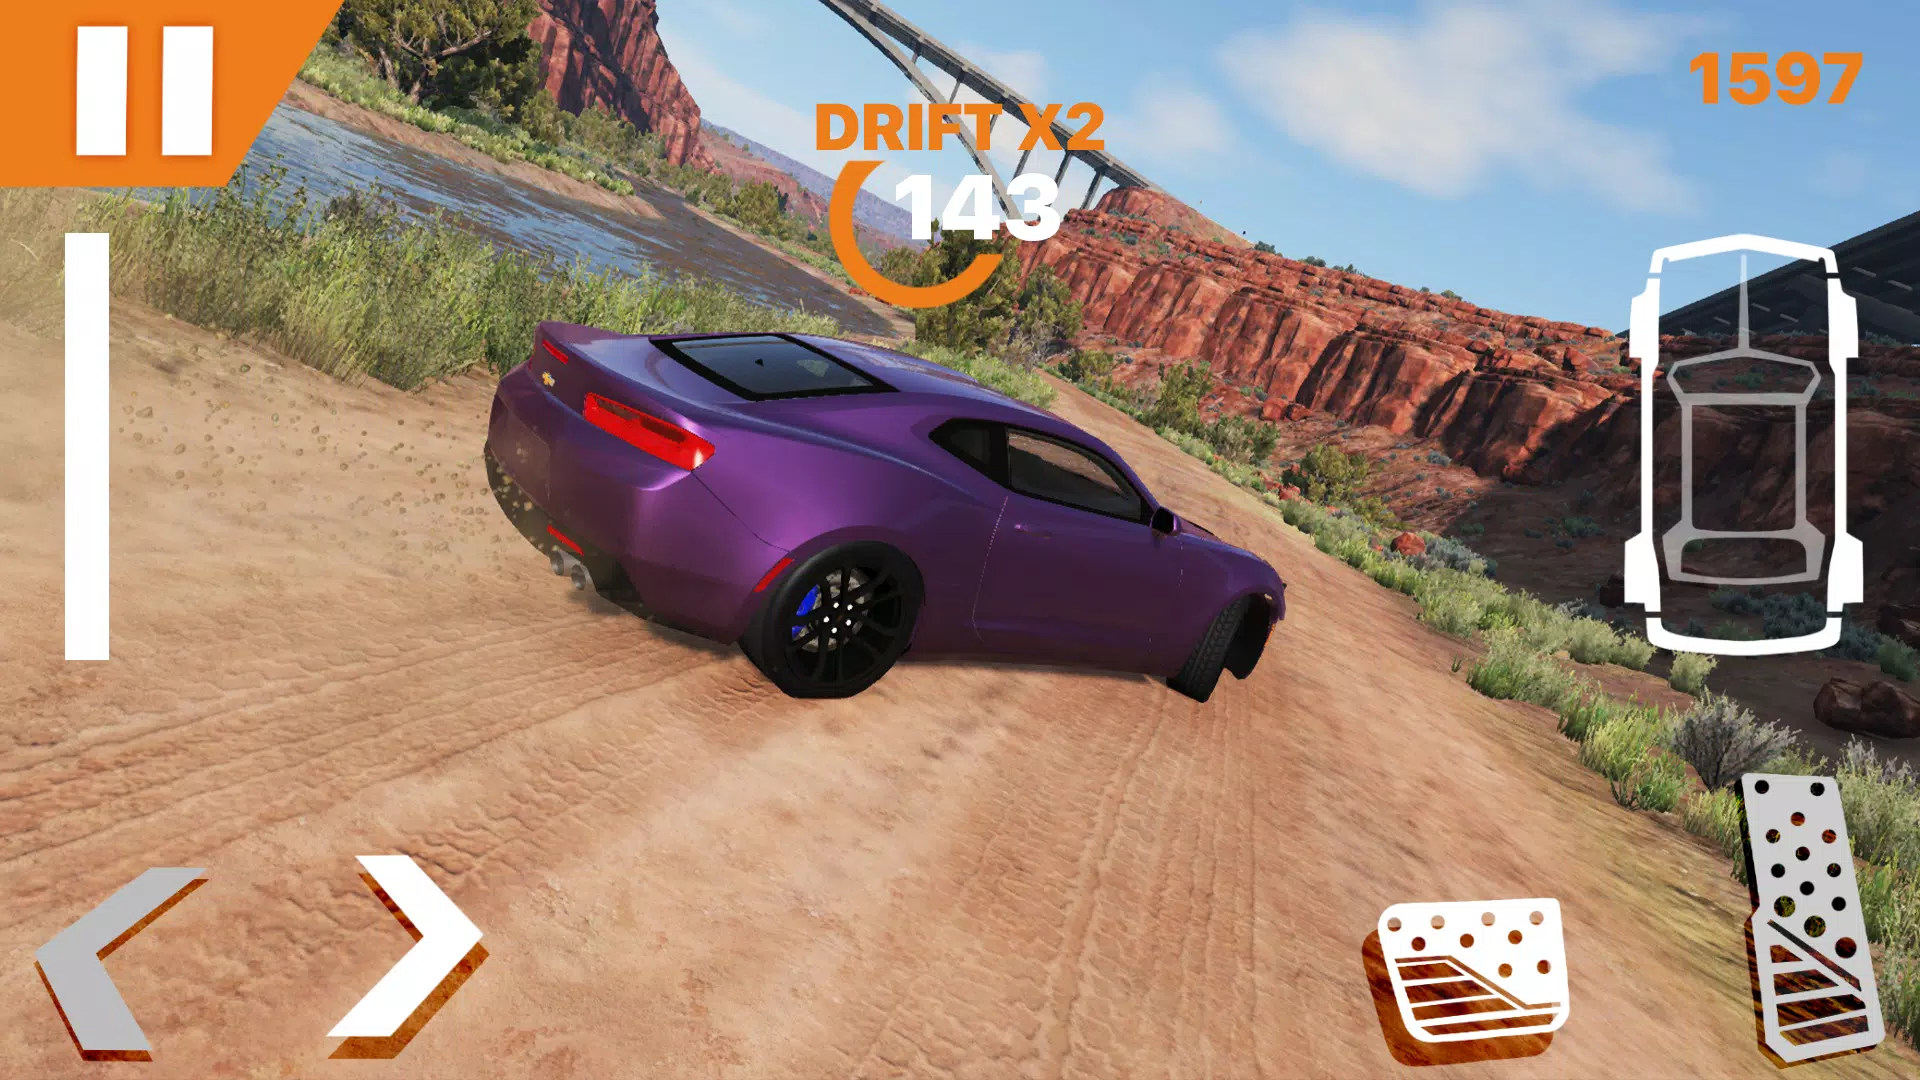 CCO Car Crash Online Simulator on the App Store